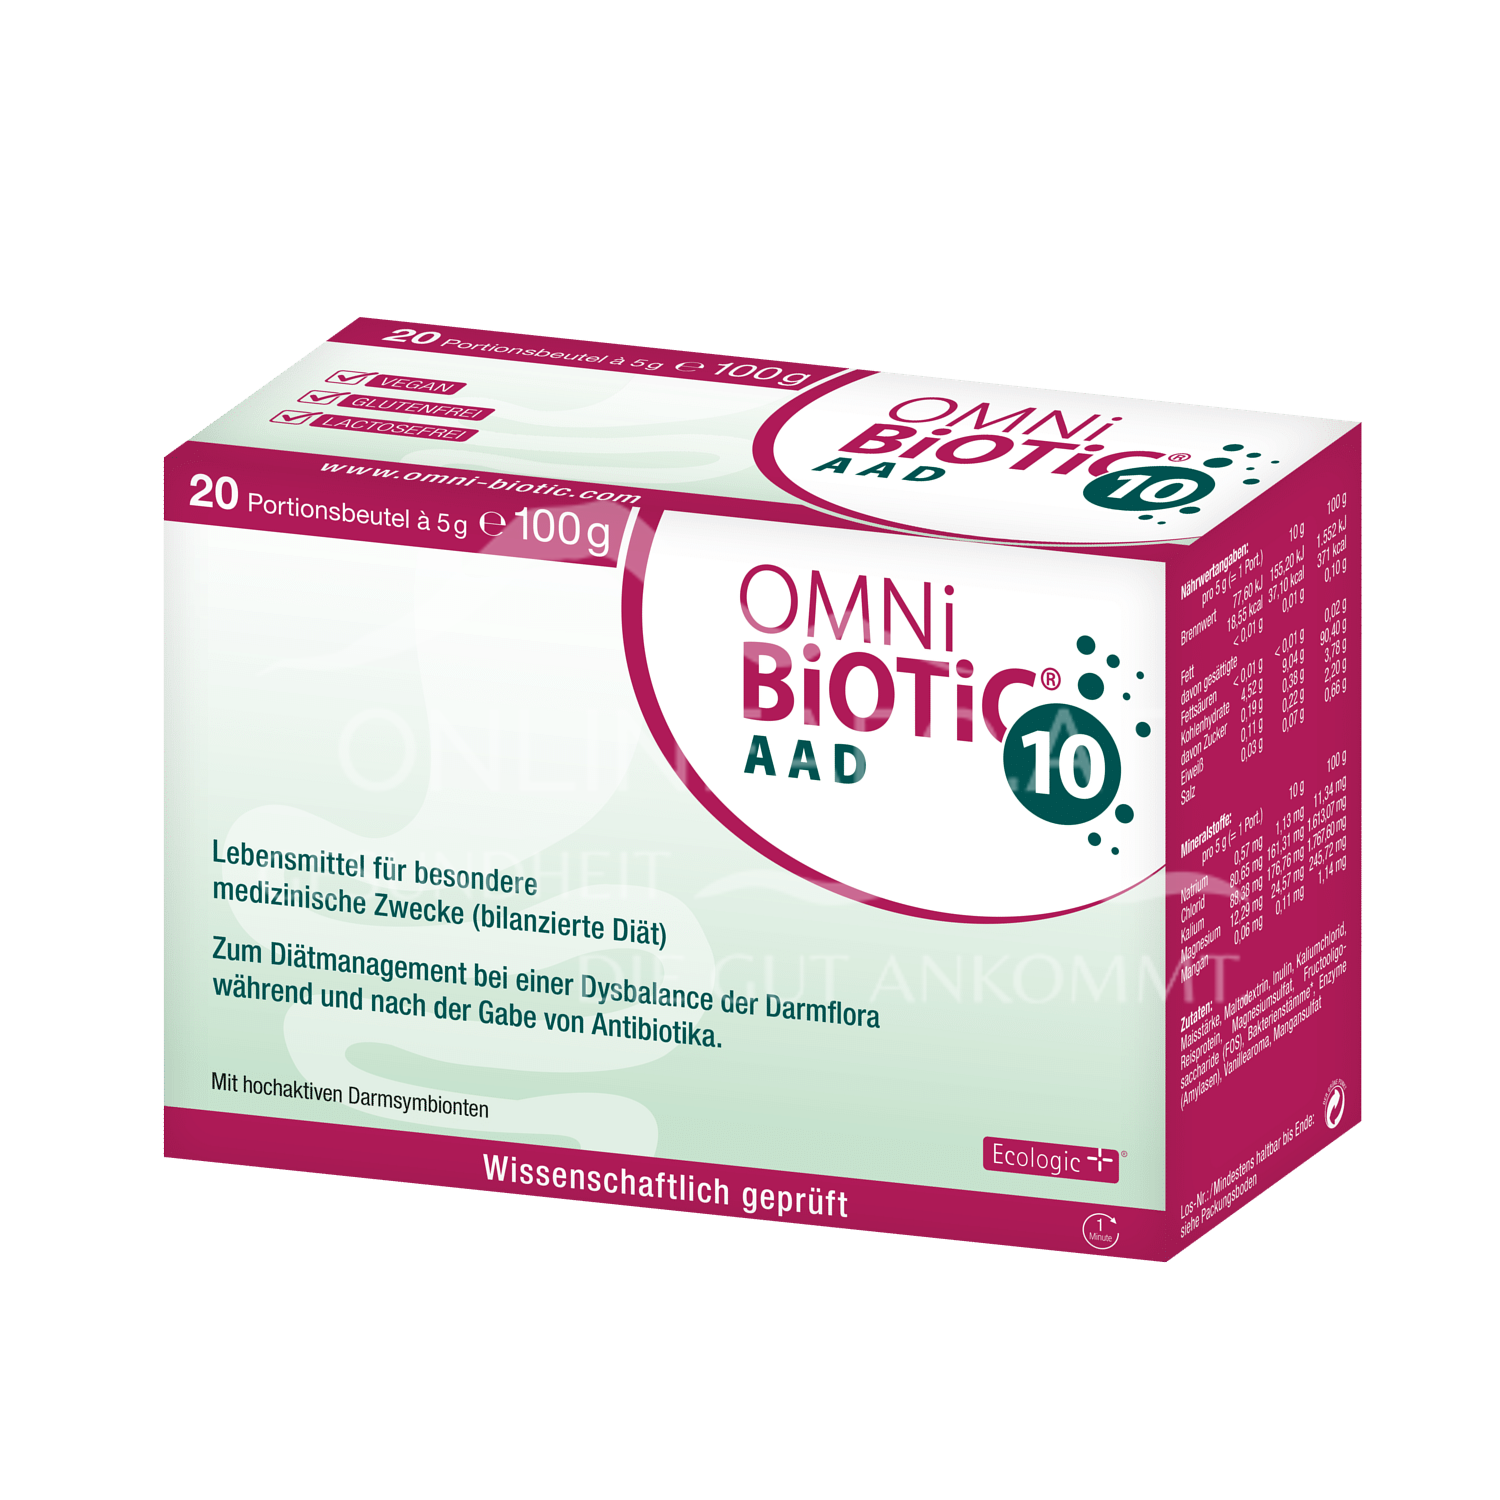 OMNi-BiOTiC® 10 AAD 5g Sachets